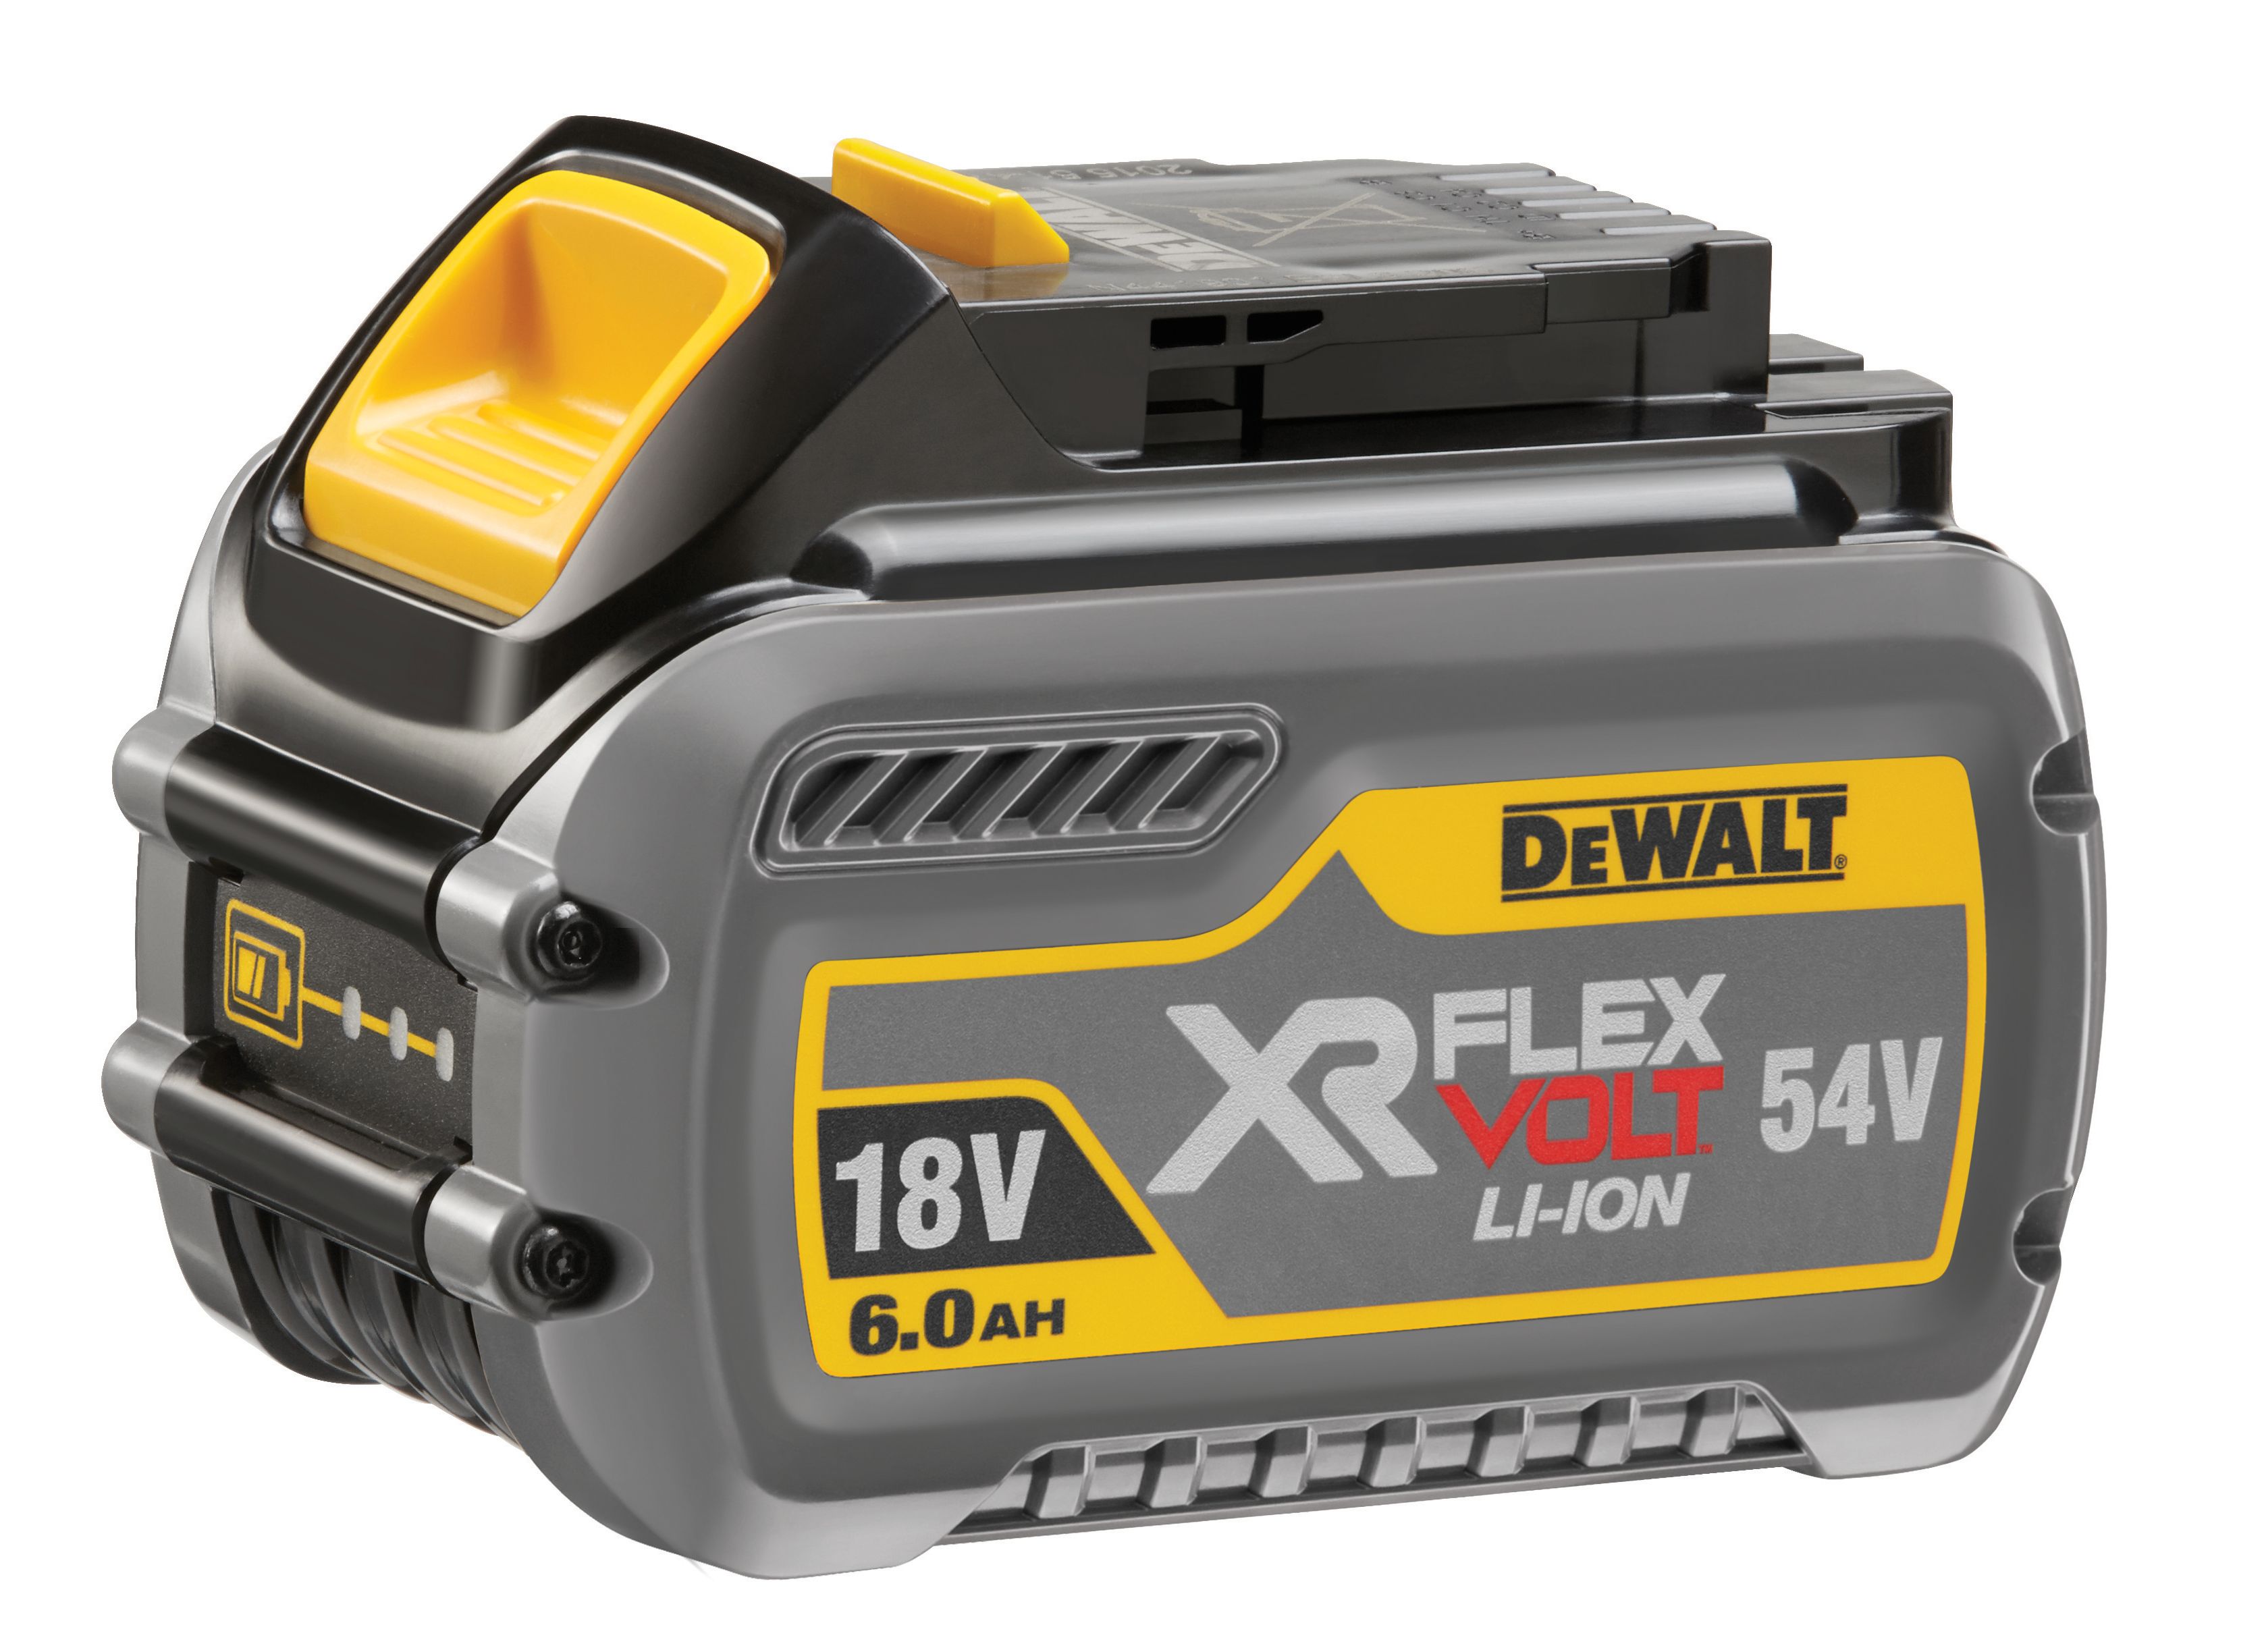 DEWALT DCB546 18V - 54V Xr Flexvolt 6.0AH Battery